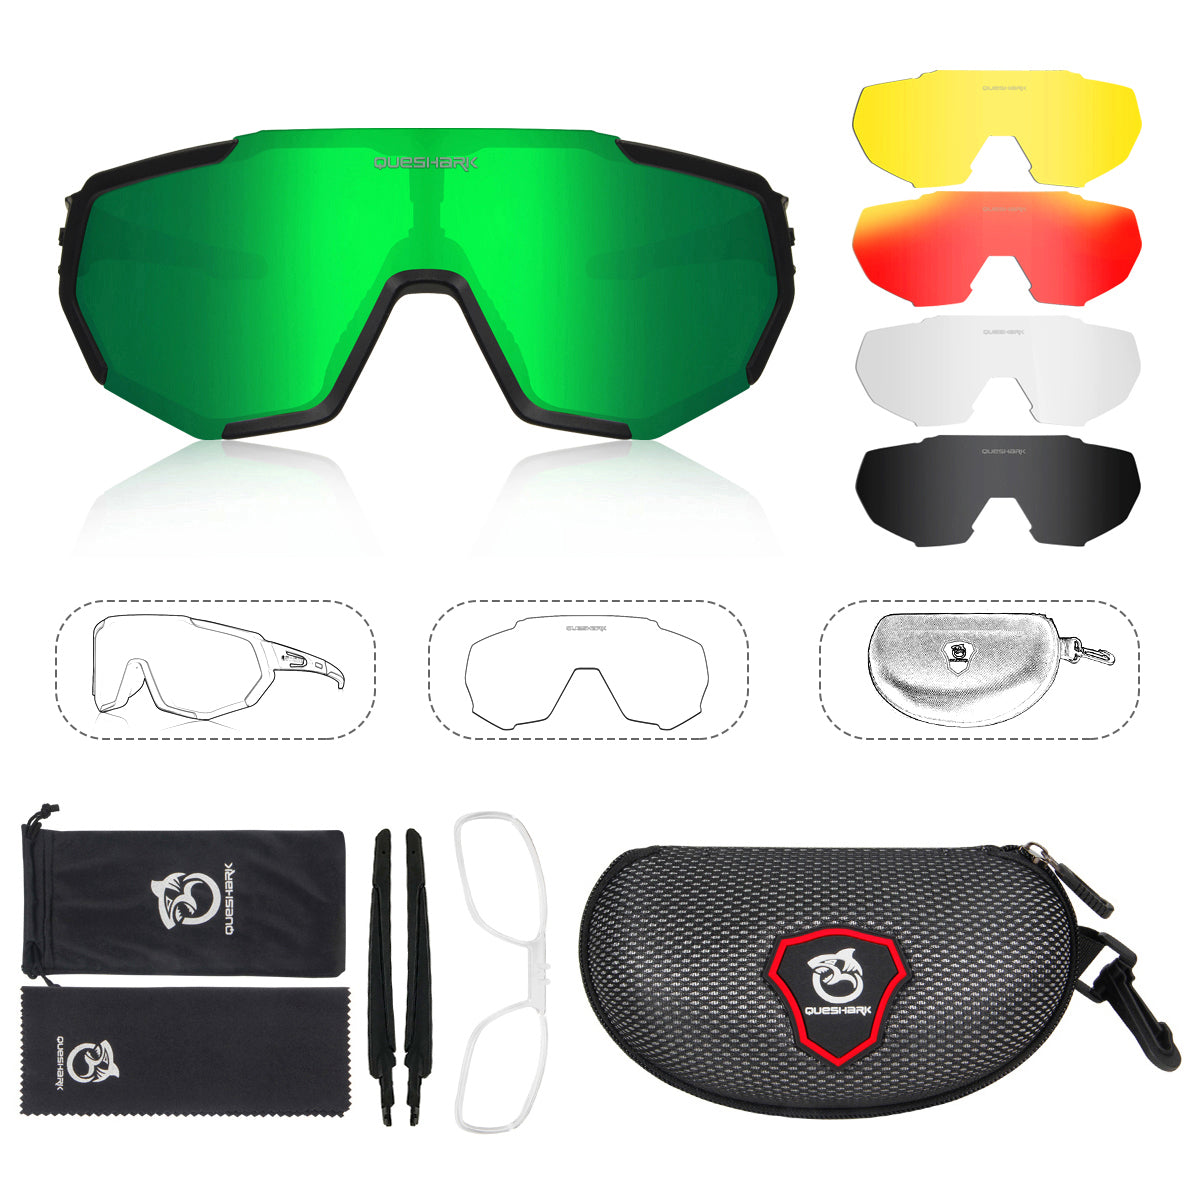 <transcy>QE48 noir vert lunettes polarisées vélo lunettes de soleil lunettes de vélo lunettes de cyclisme UV400 5 lentille/ensemble</transcy>